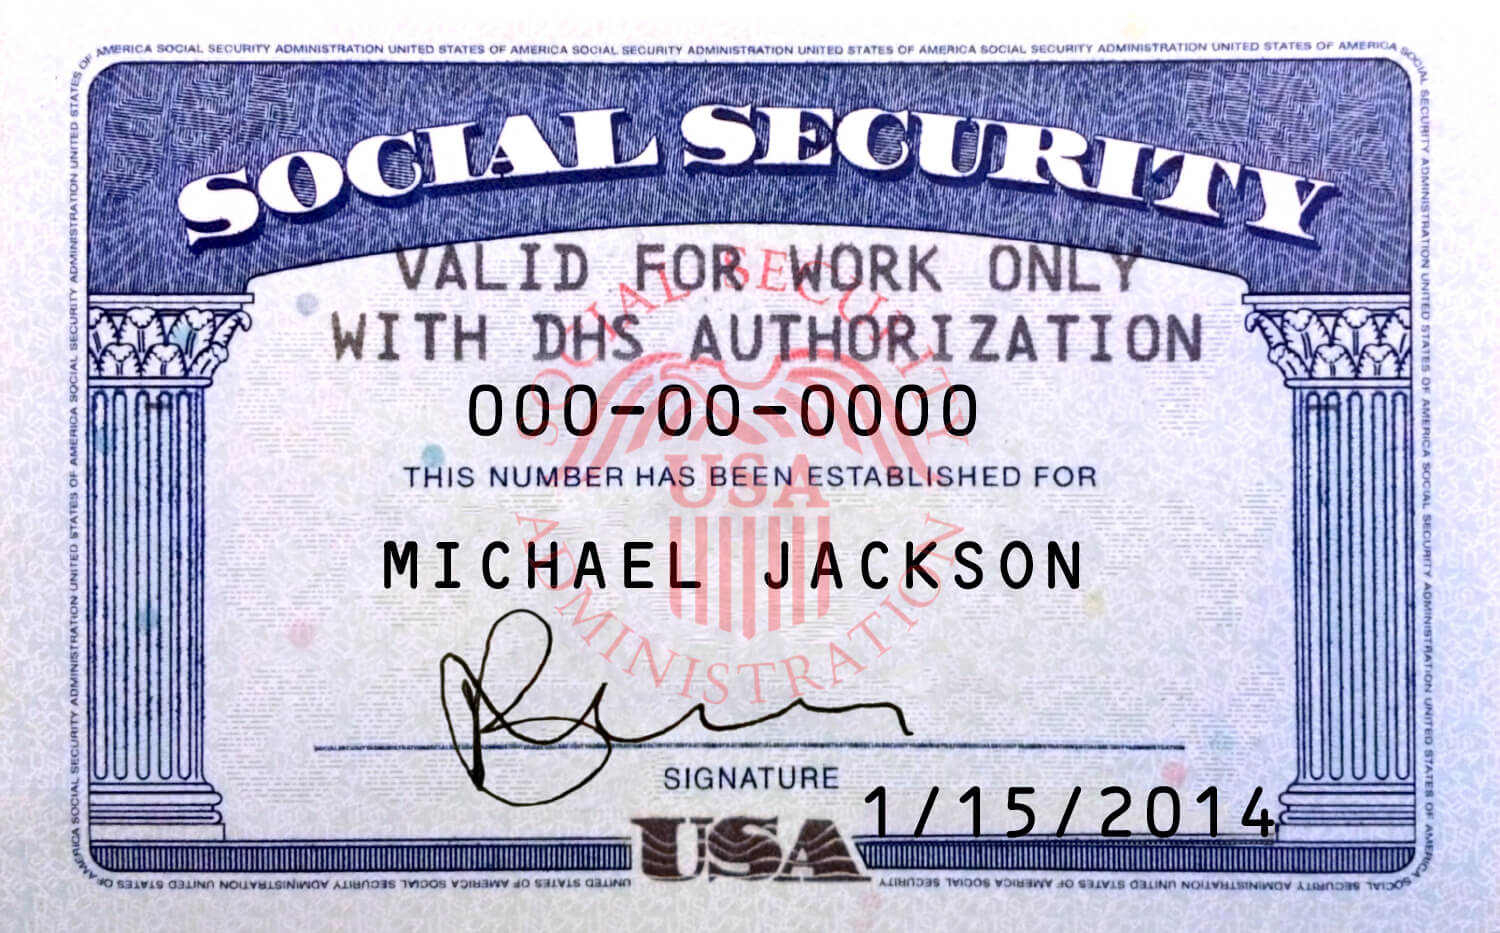 61 [Pdf] Social Security Number 765 Generator Printable Hd In Social Security Card Template Pdf